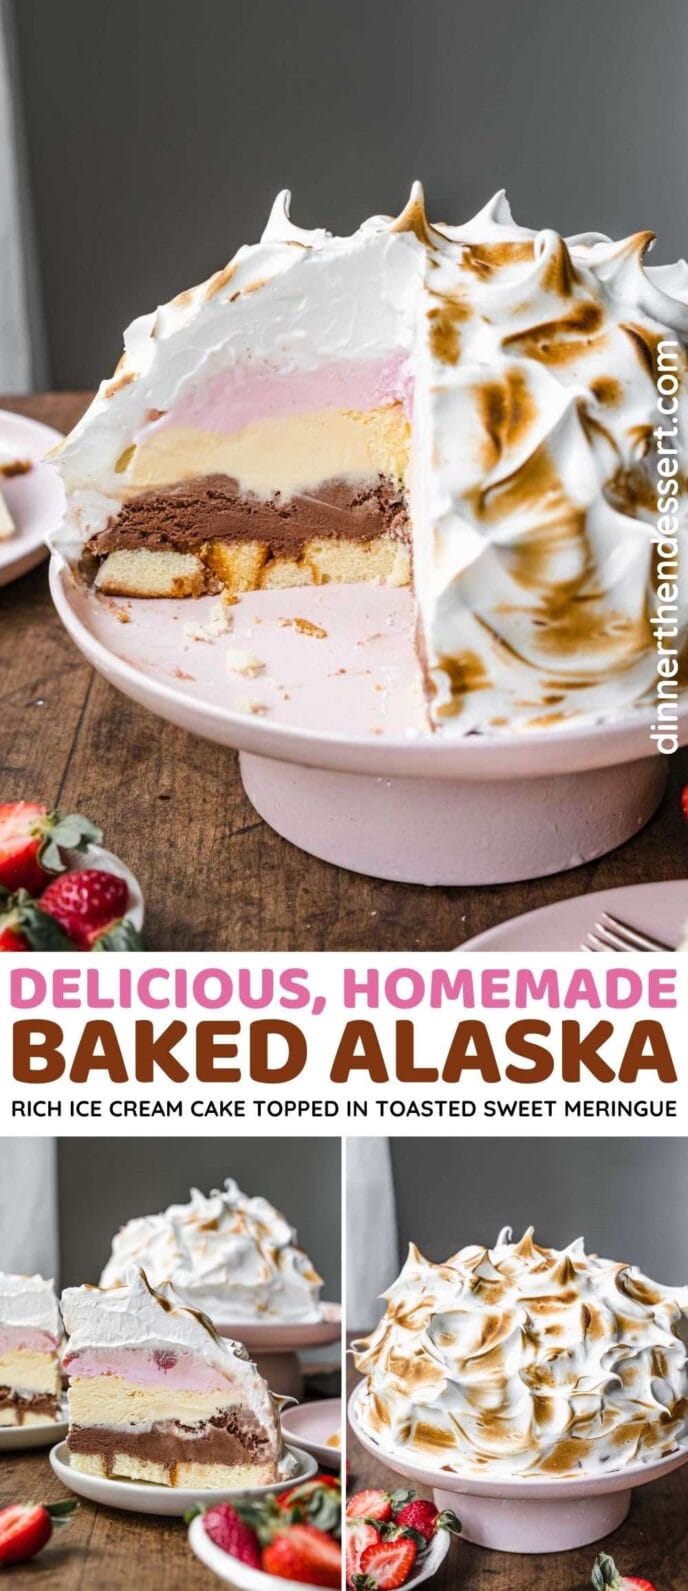 Baked Alaska collage